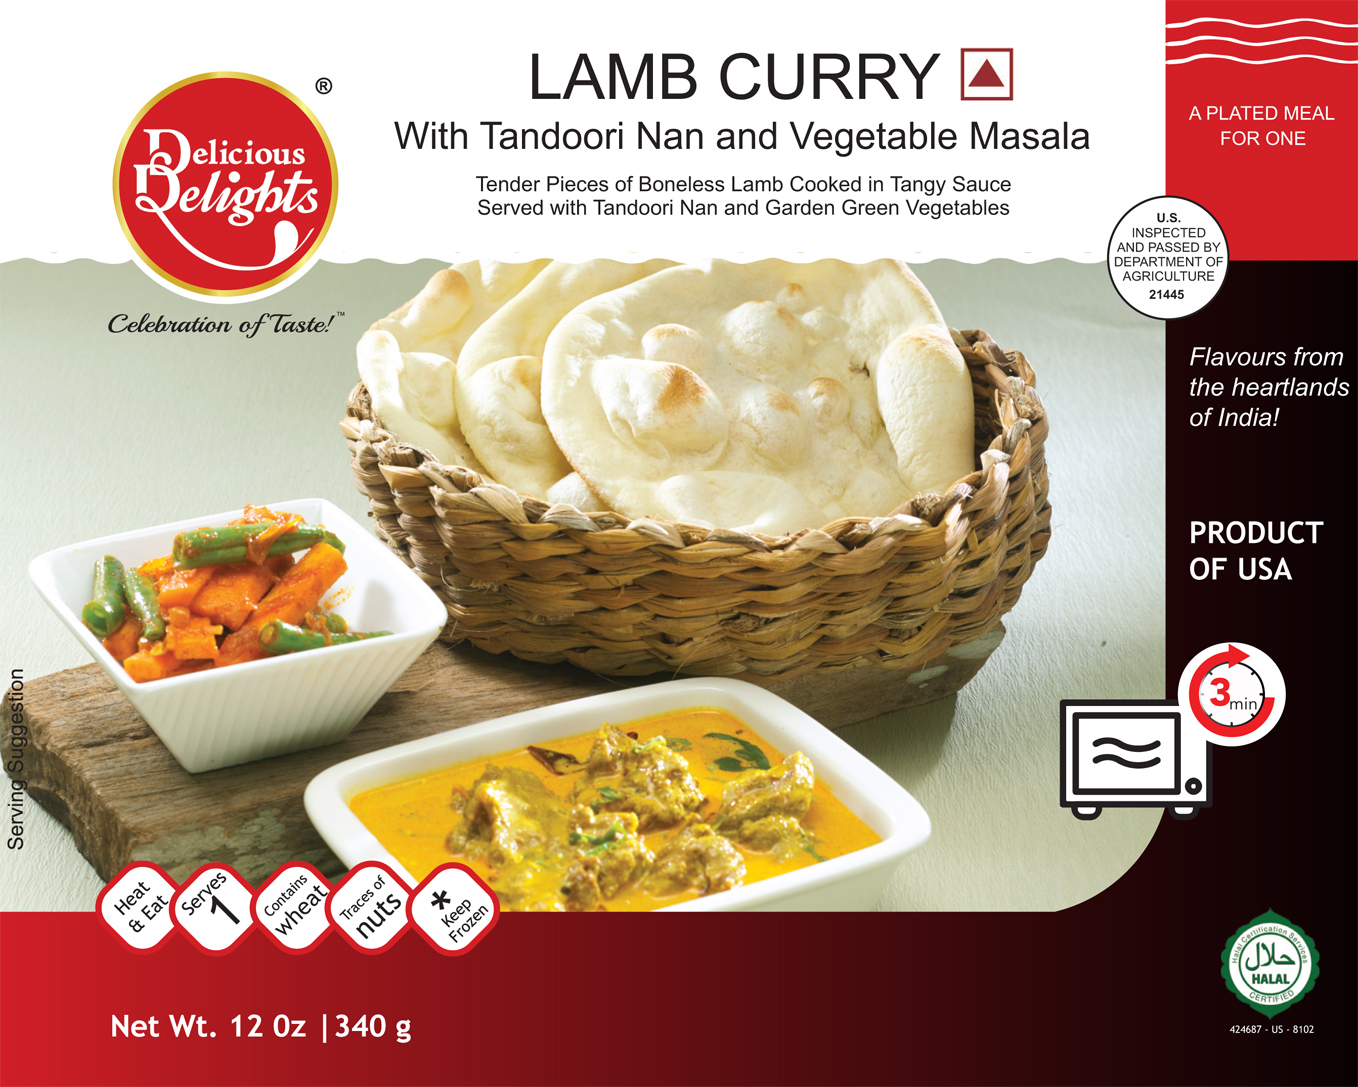 Delicious Delights Lamb Curry with Tandoori Nan and Vegetable Masala